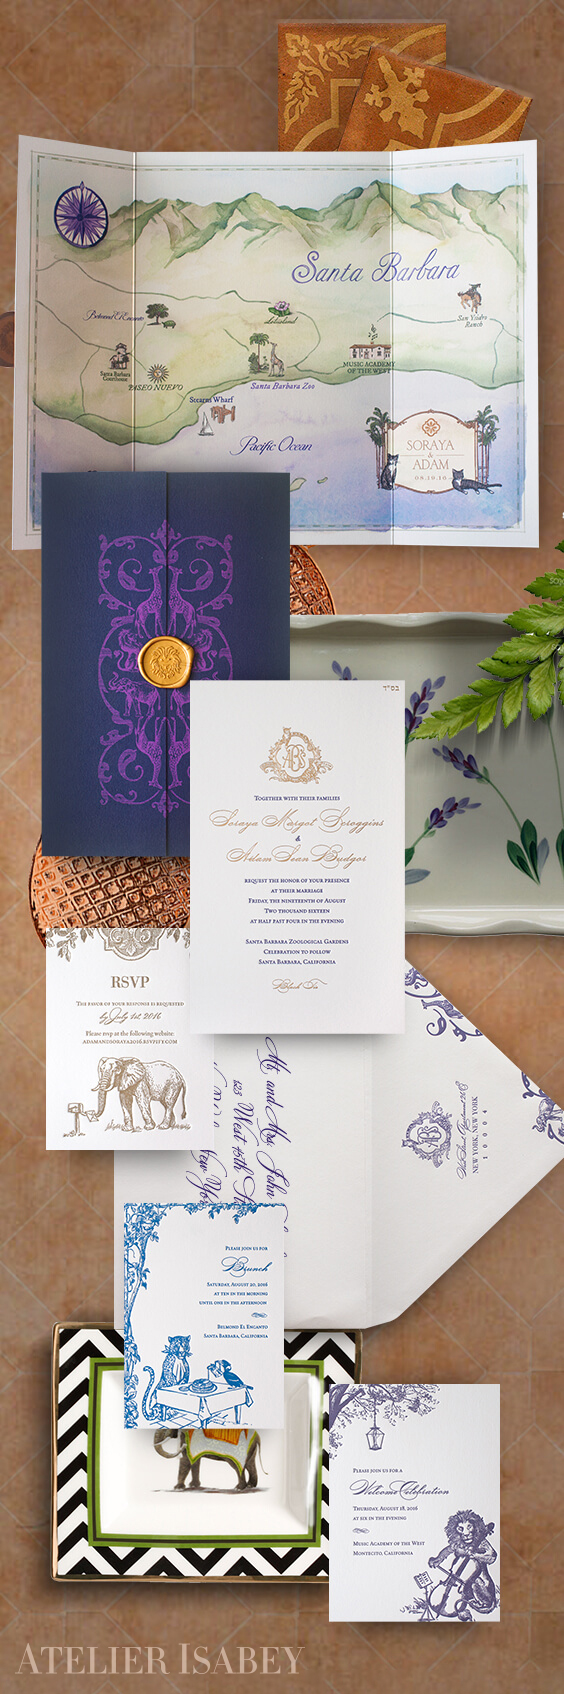 Santa Barbara destination wedding invitation